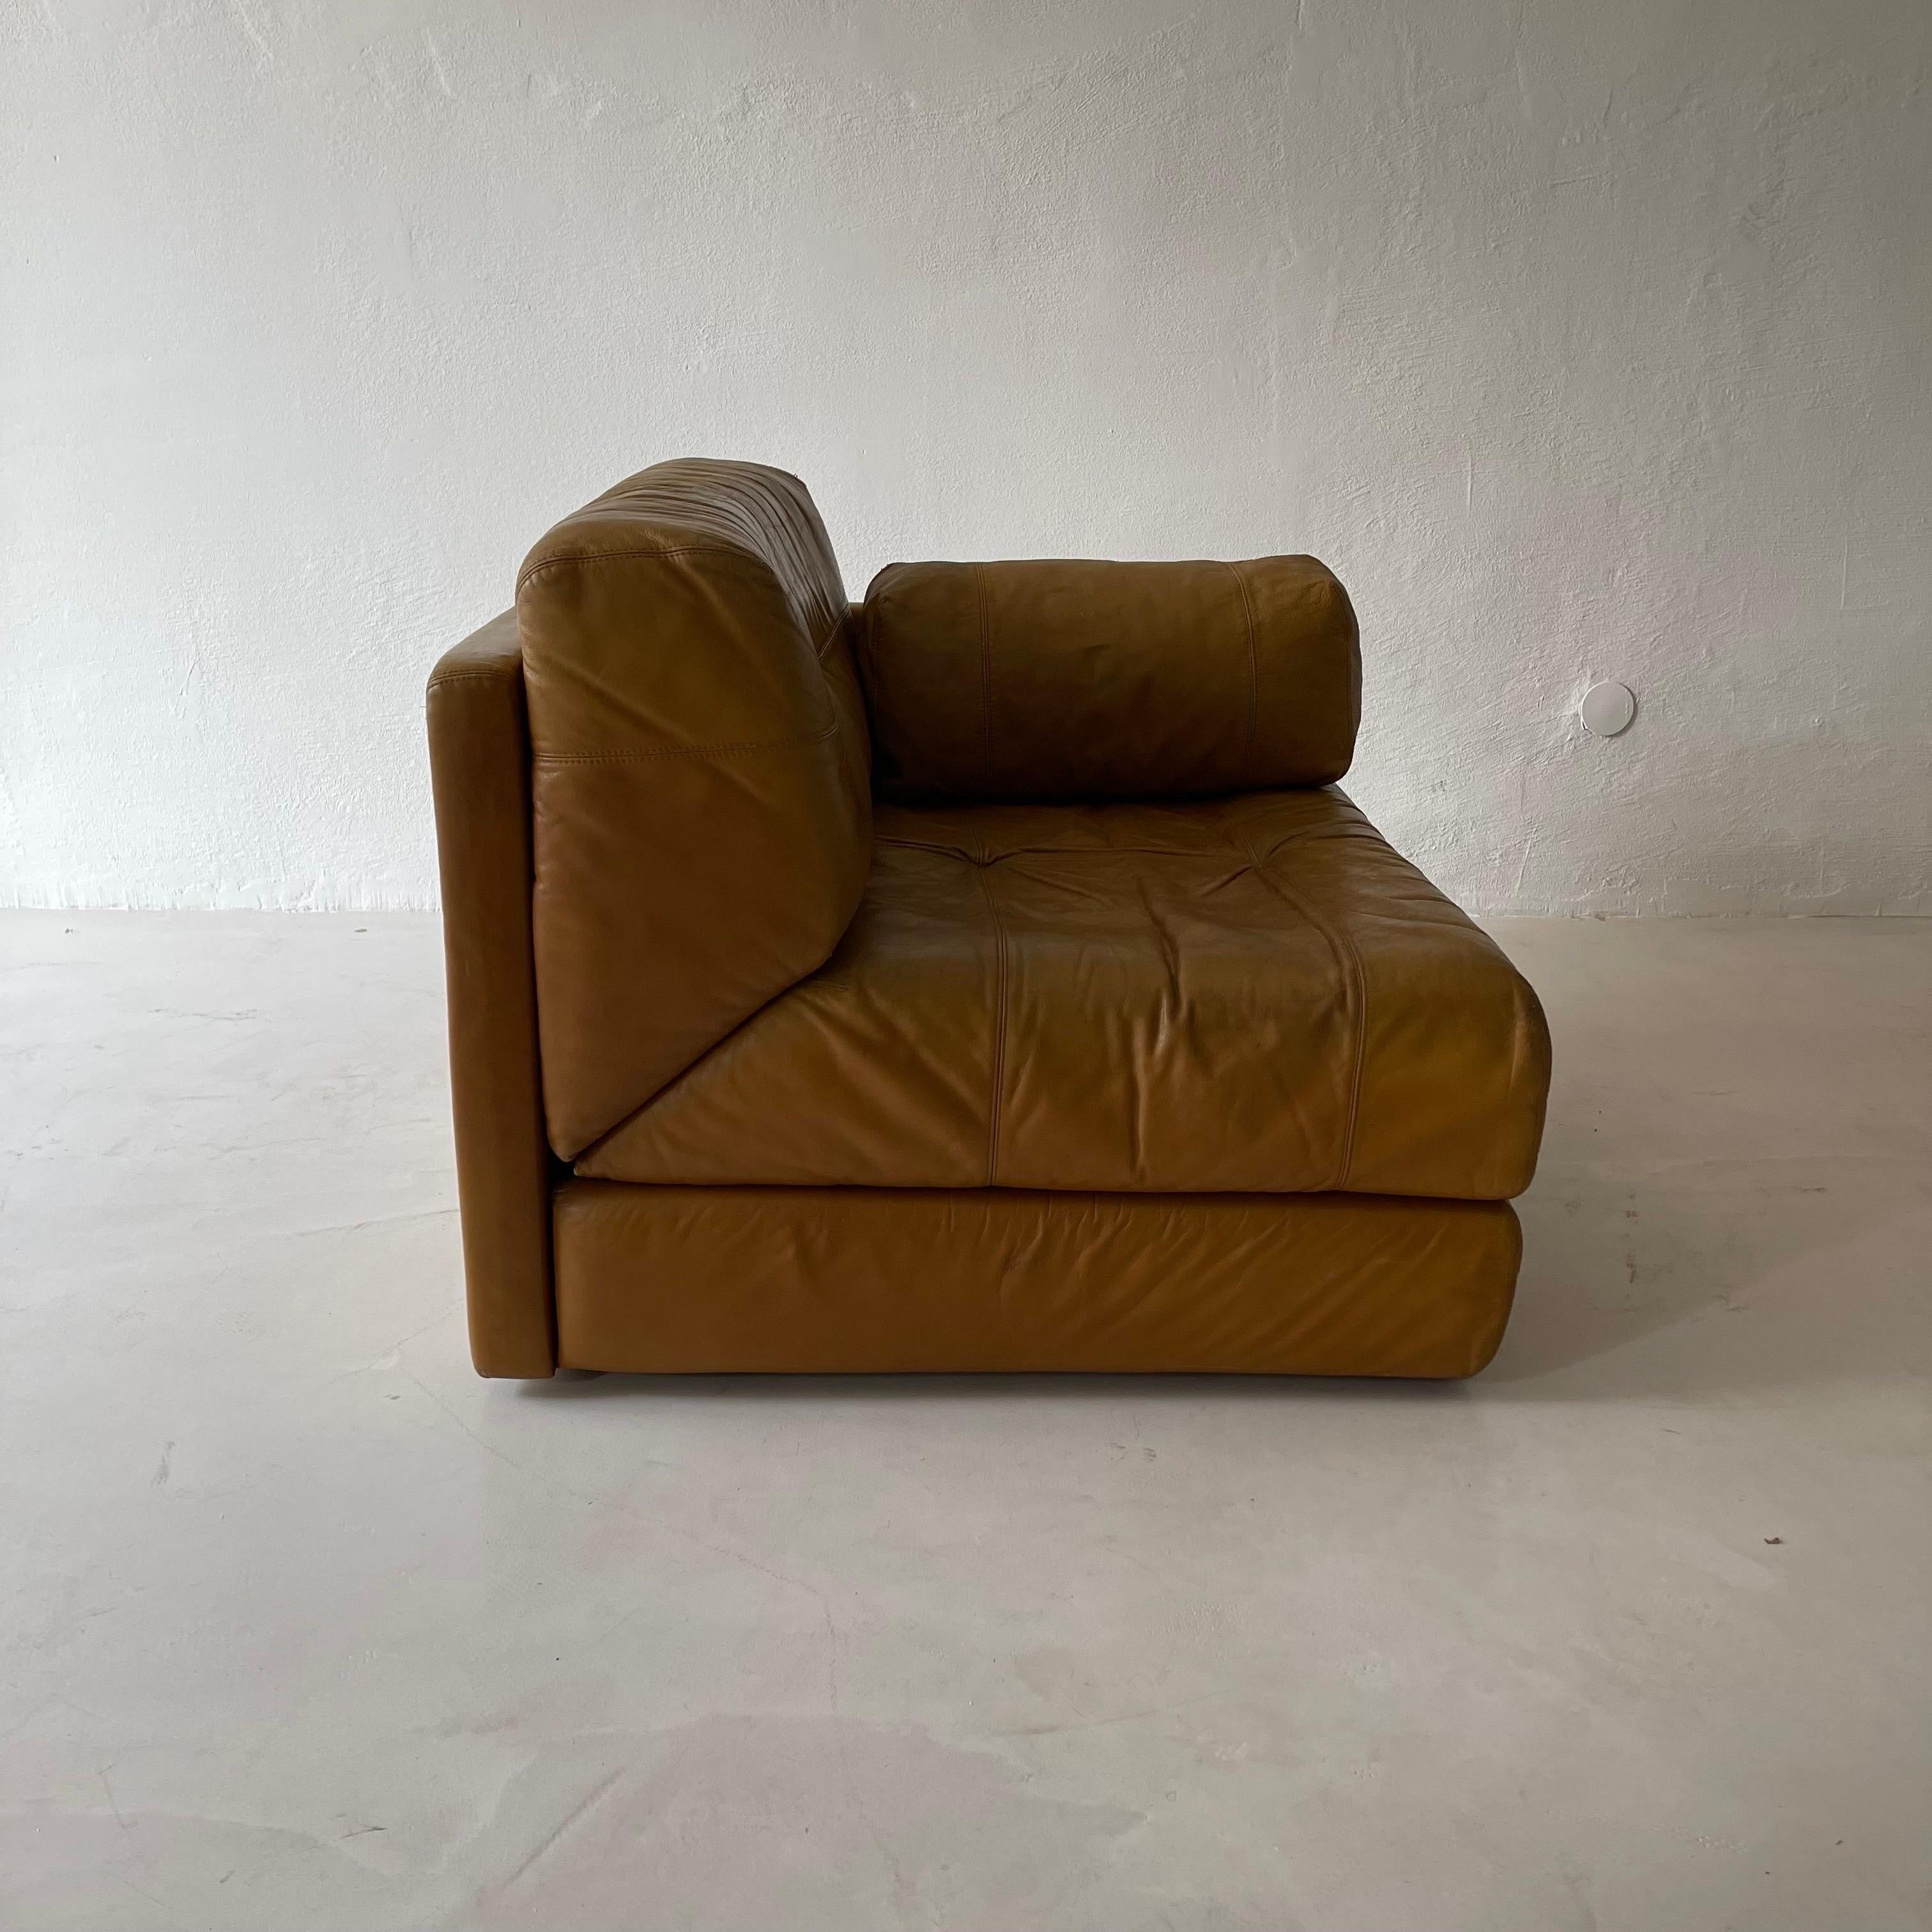 Wittmann Atrium Cognac Leather Pair Lounge Chairs, 1970s For Sale 6